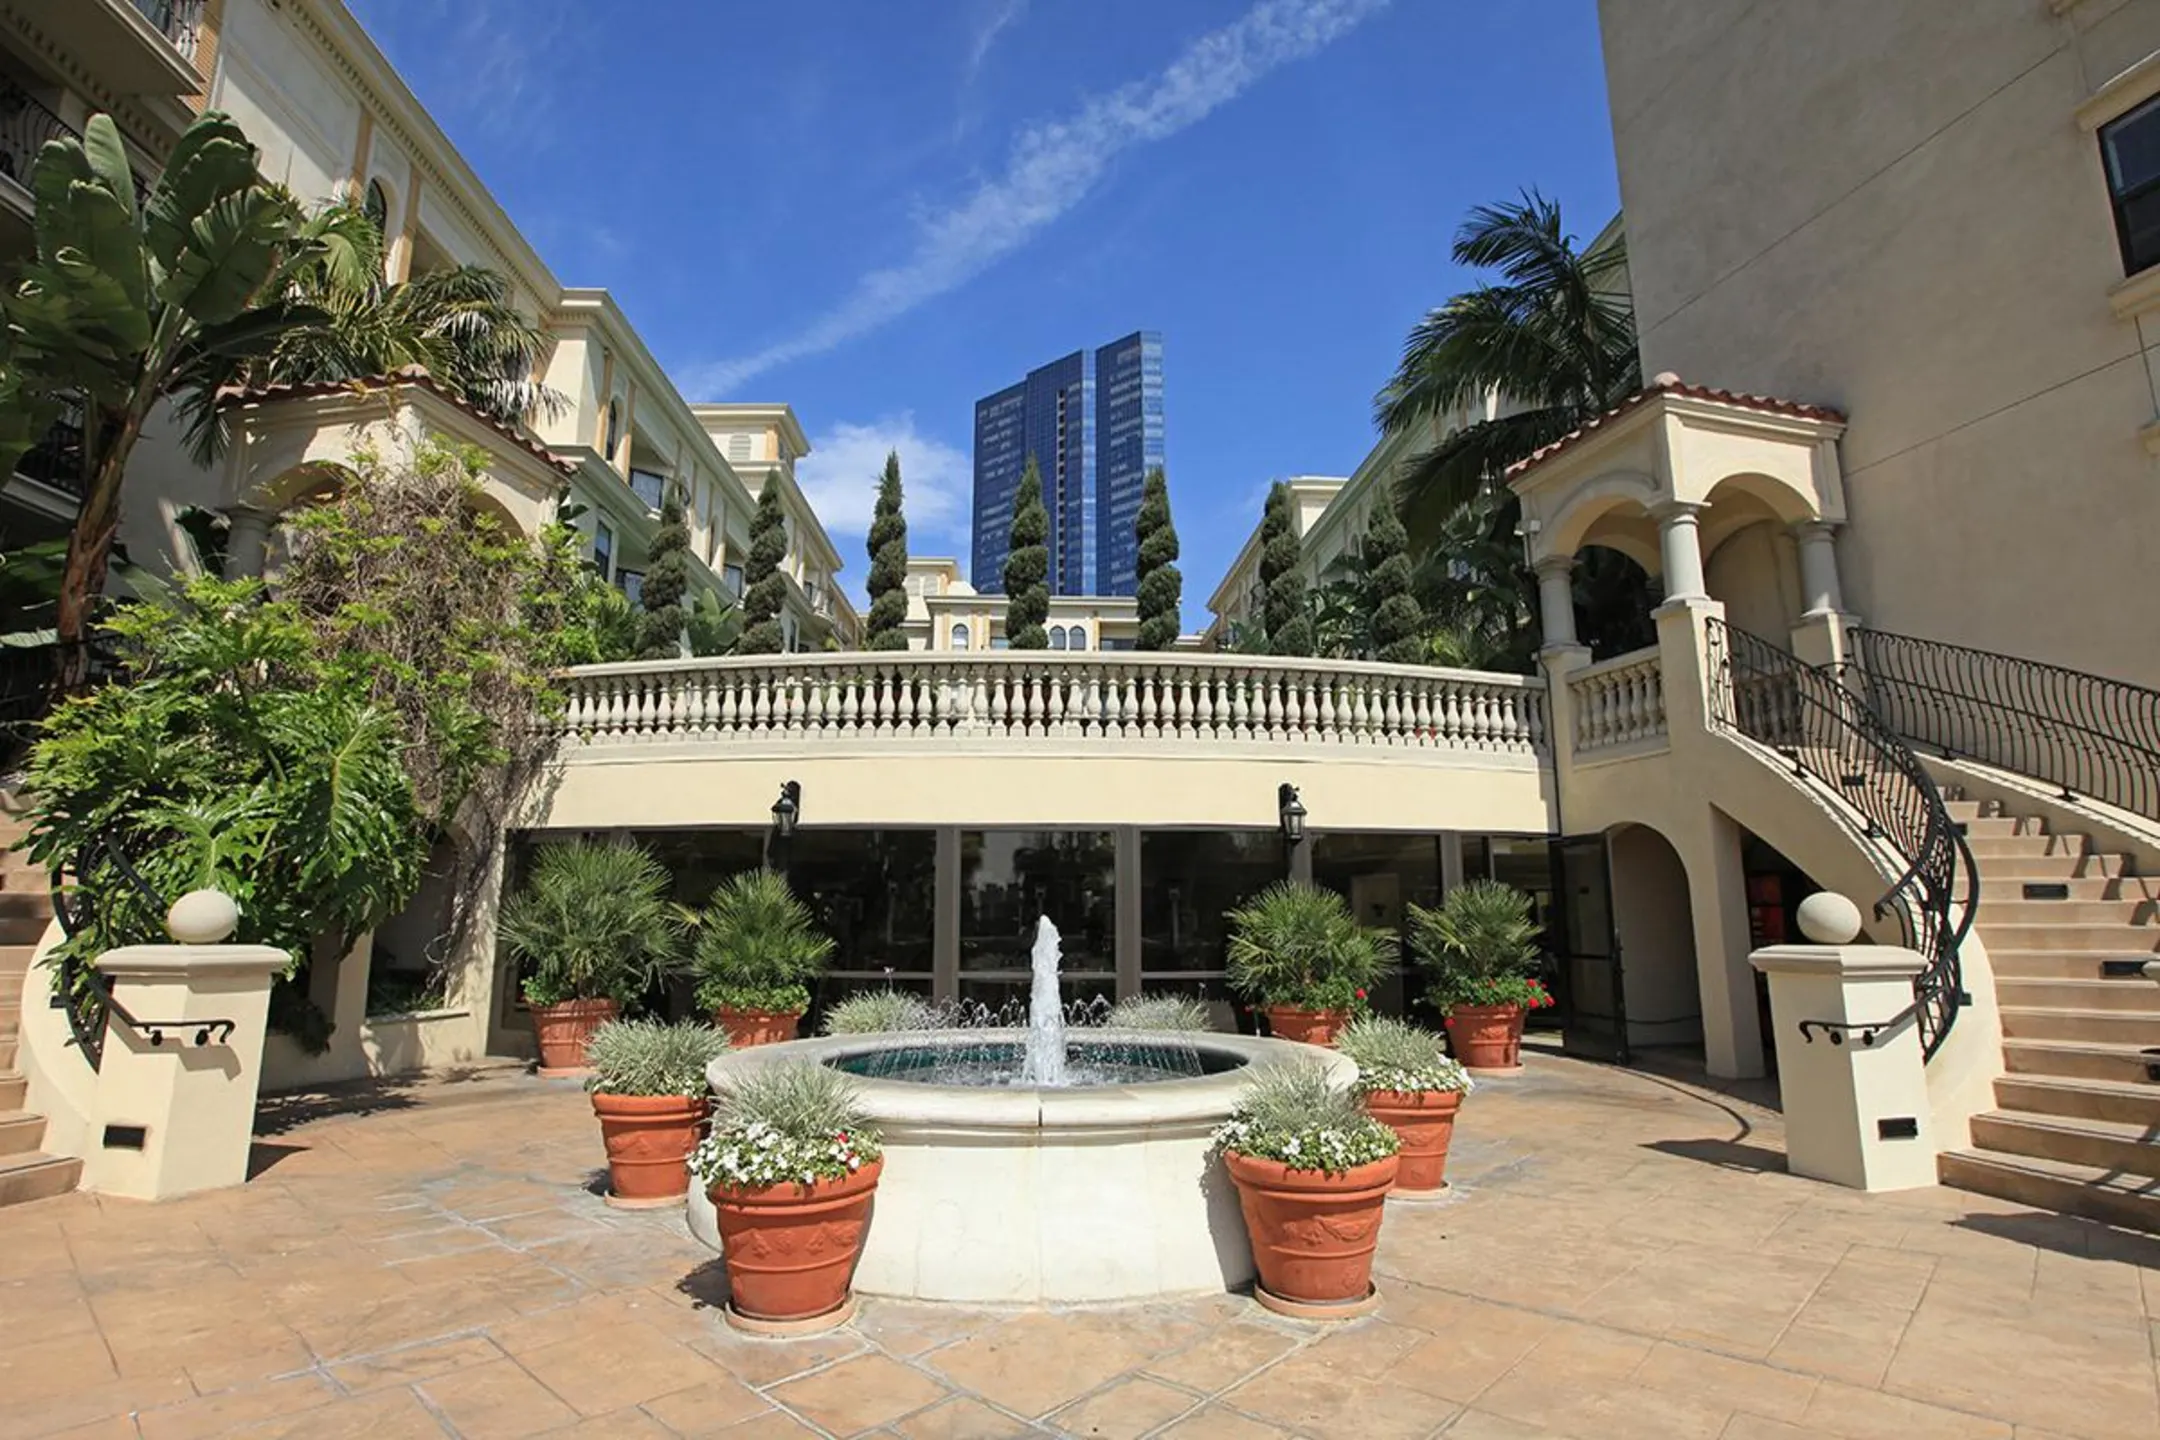 Courtyard - The Medici - Los Angeles, CA